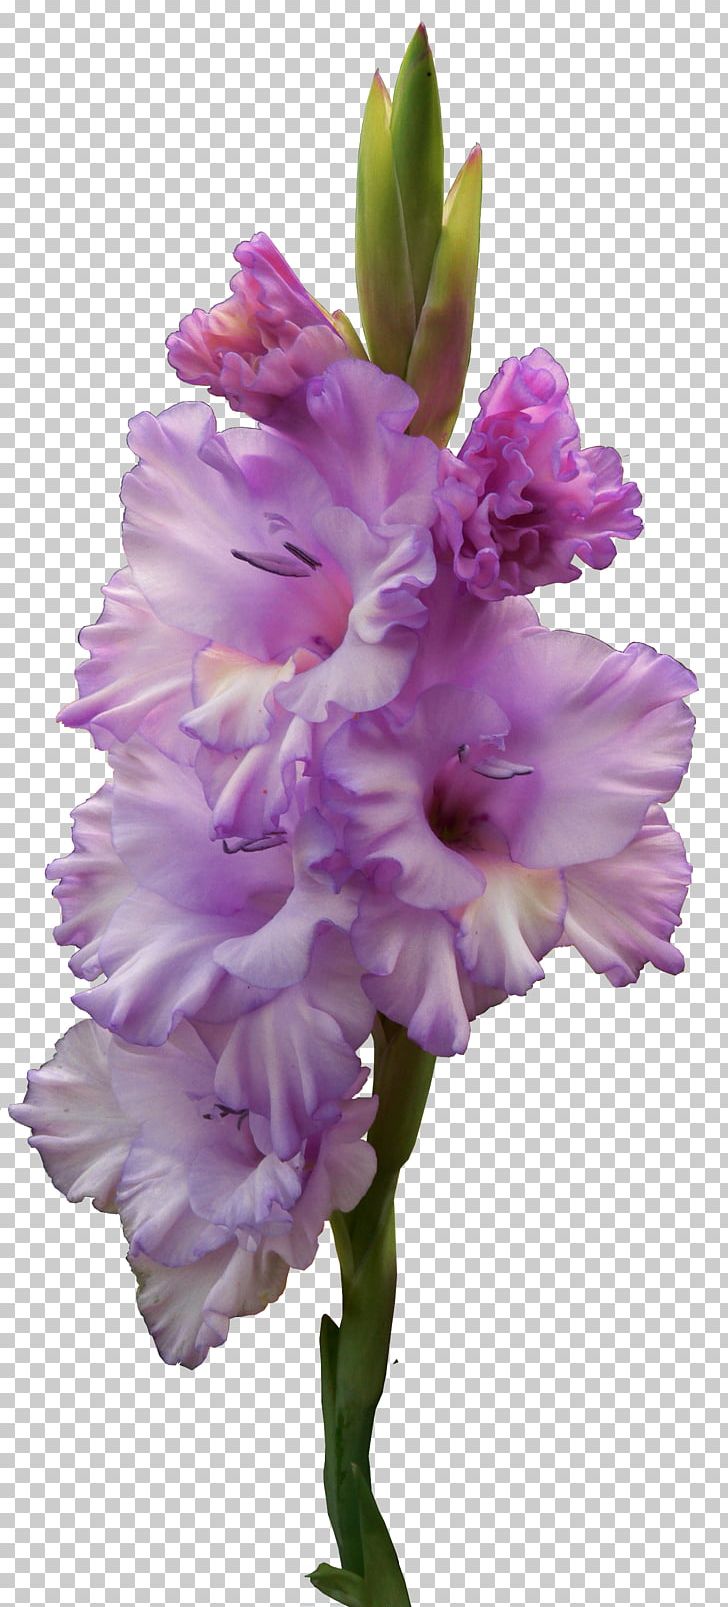 Gladiolus Murielae Flower Bulb PNG, Clipart, Bulb, Color, Corm, Cut Flowers, Digital Image Free PNG Download